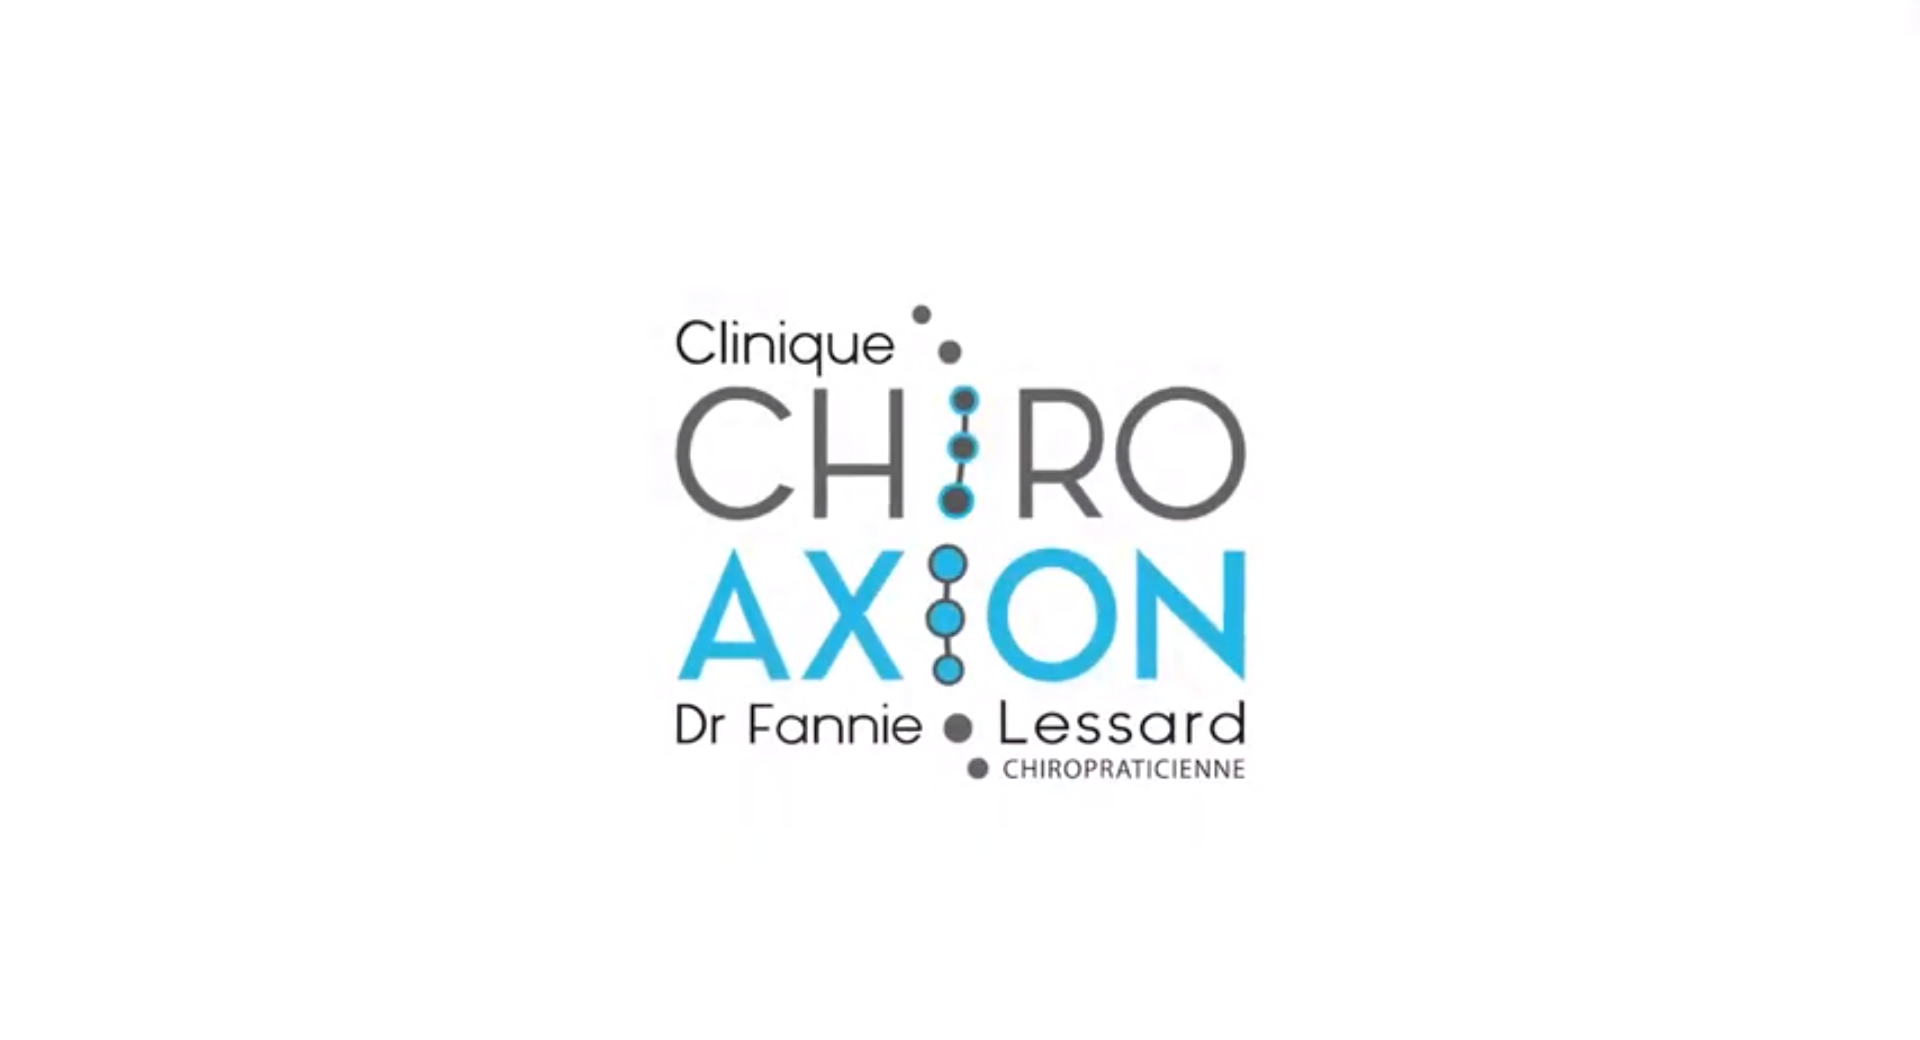 Chiropratique, Chiroaxion.com